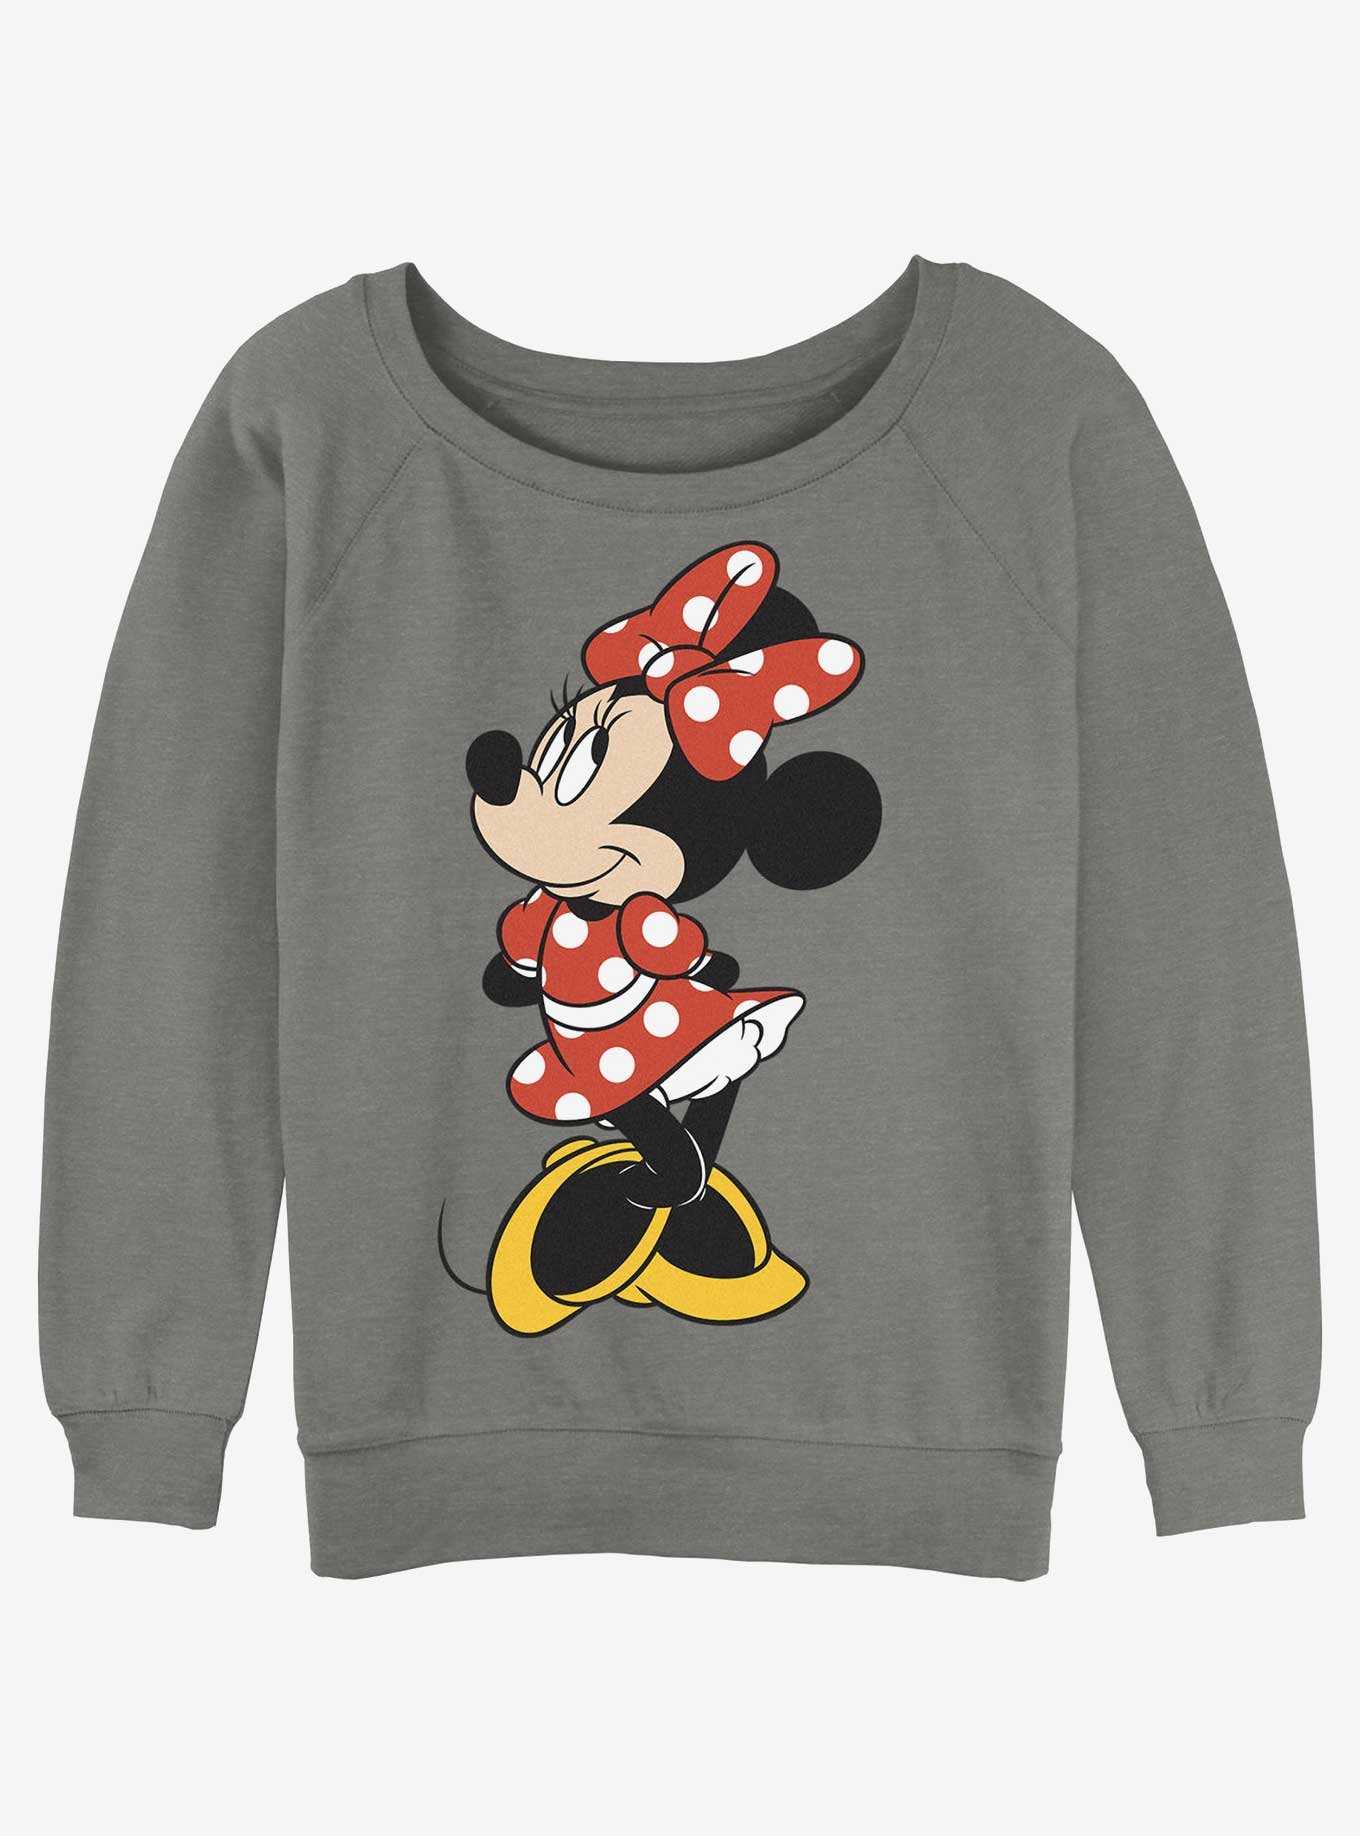 Disney Minnie Mouse Polka Dot Minnie Girls Slouchy Sweatshirt, , hi-res